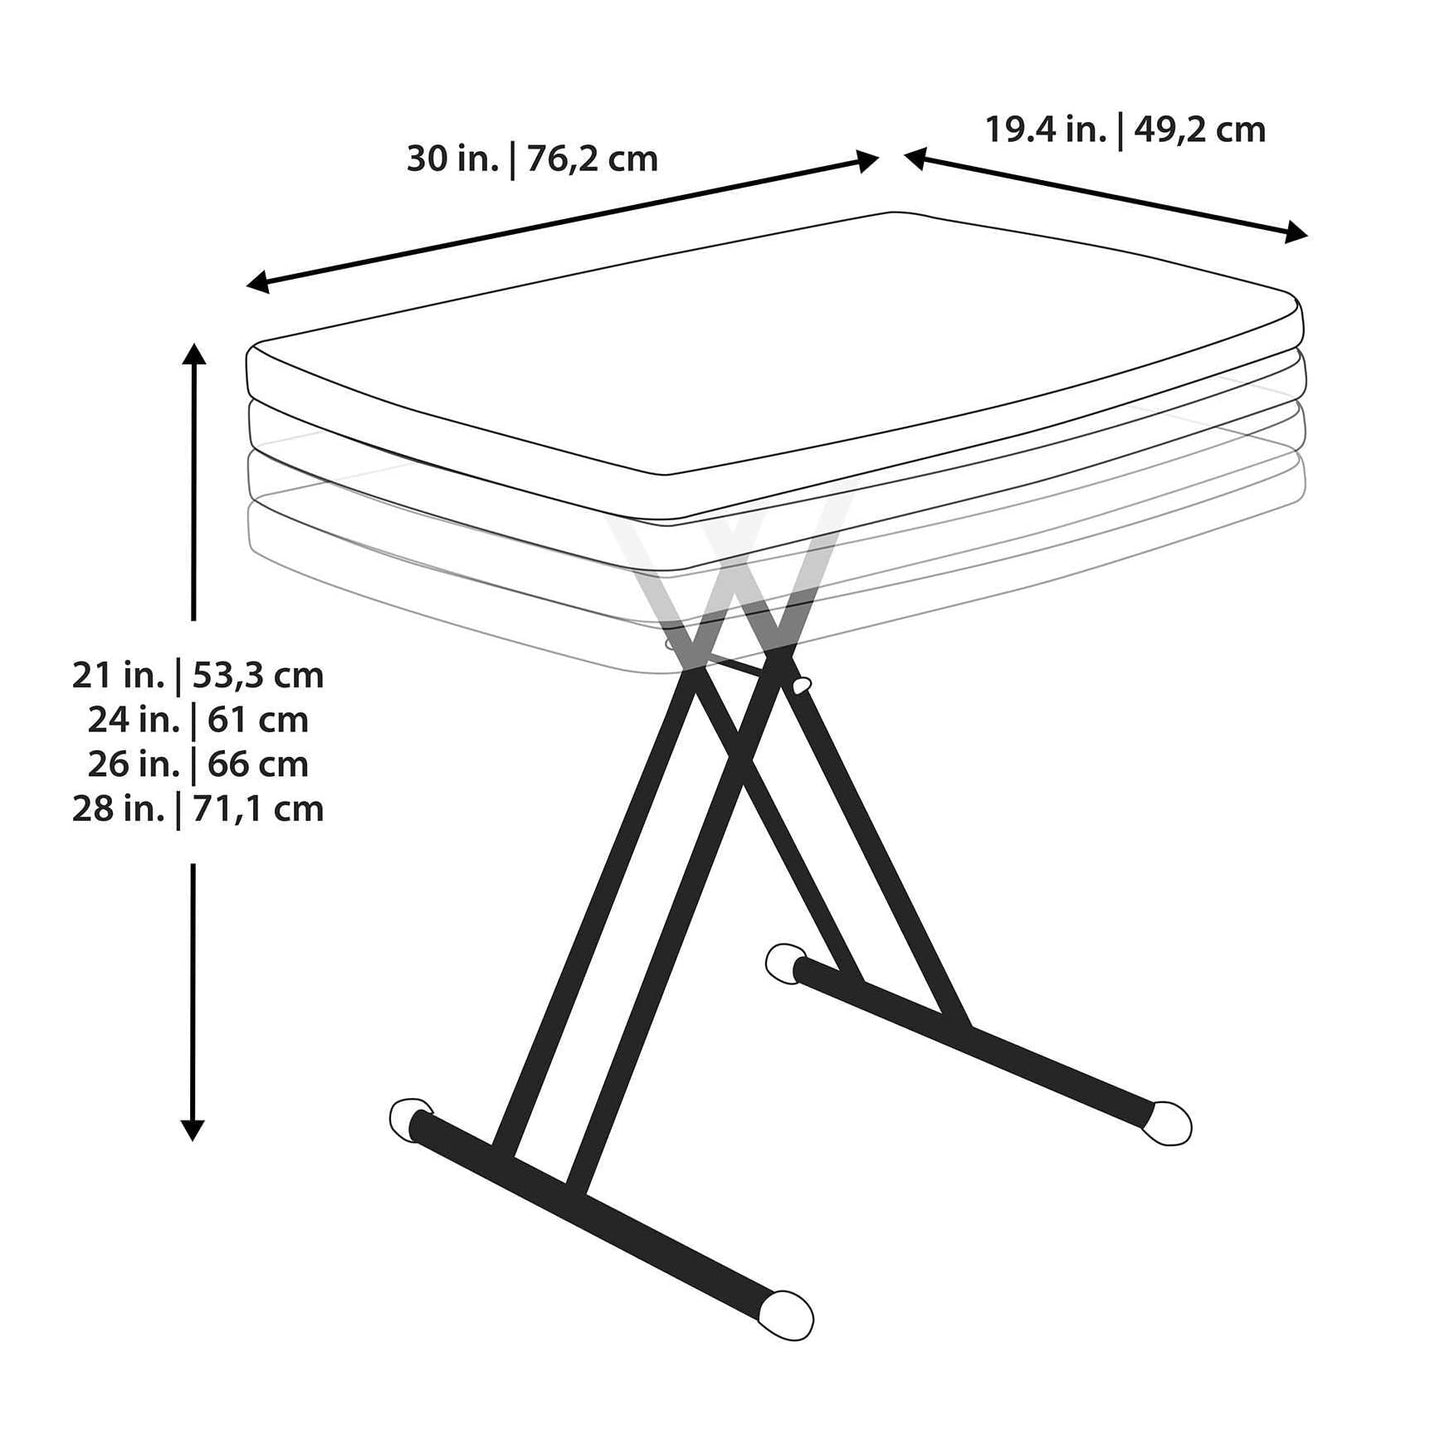 Lifetime 28240 Adjustable Folding Laptop Table TV Tray, 30 Inch Almond